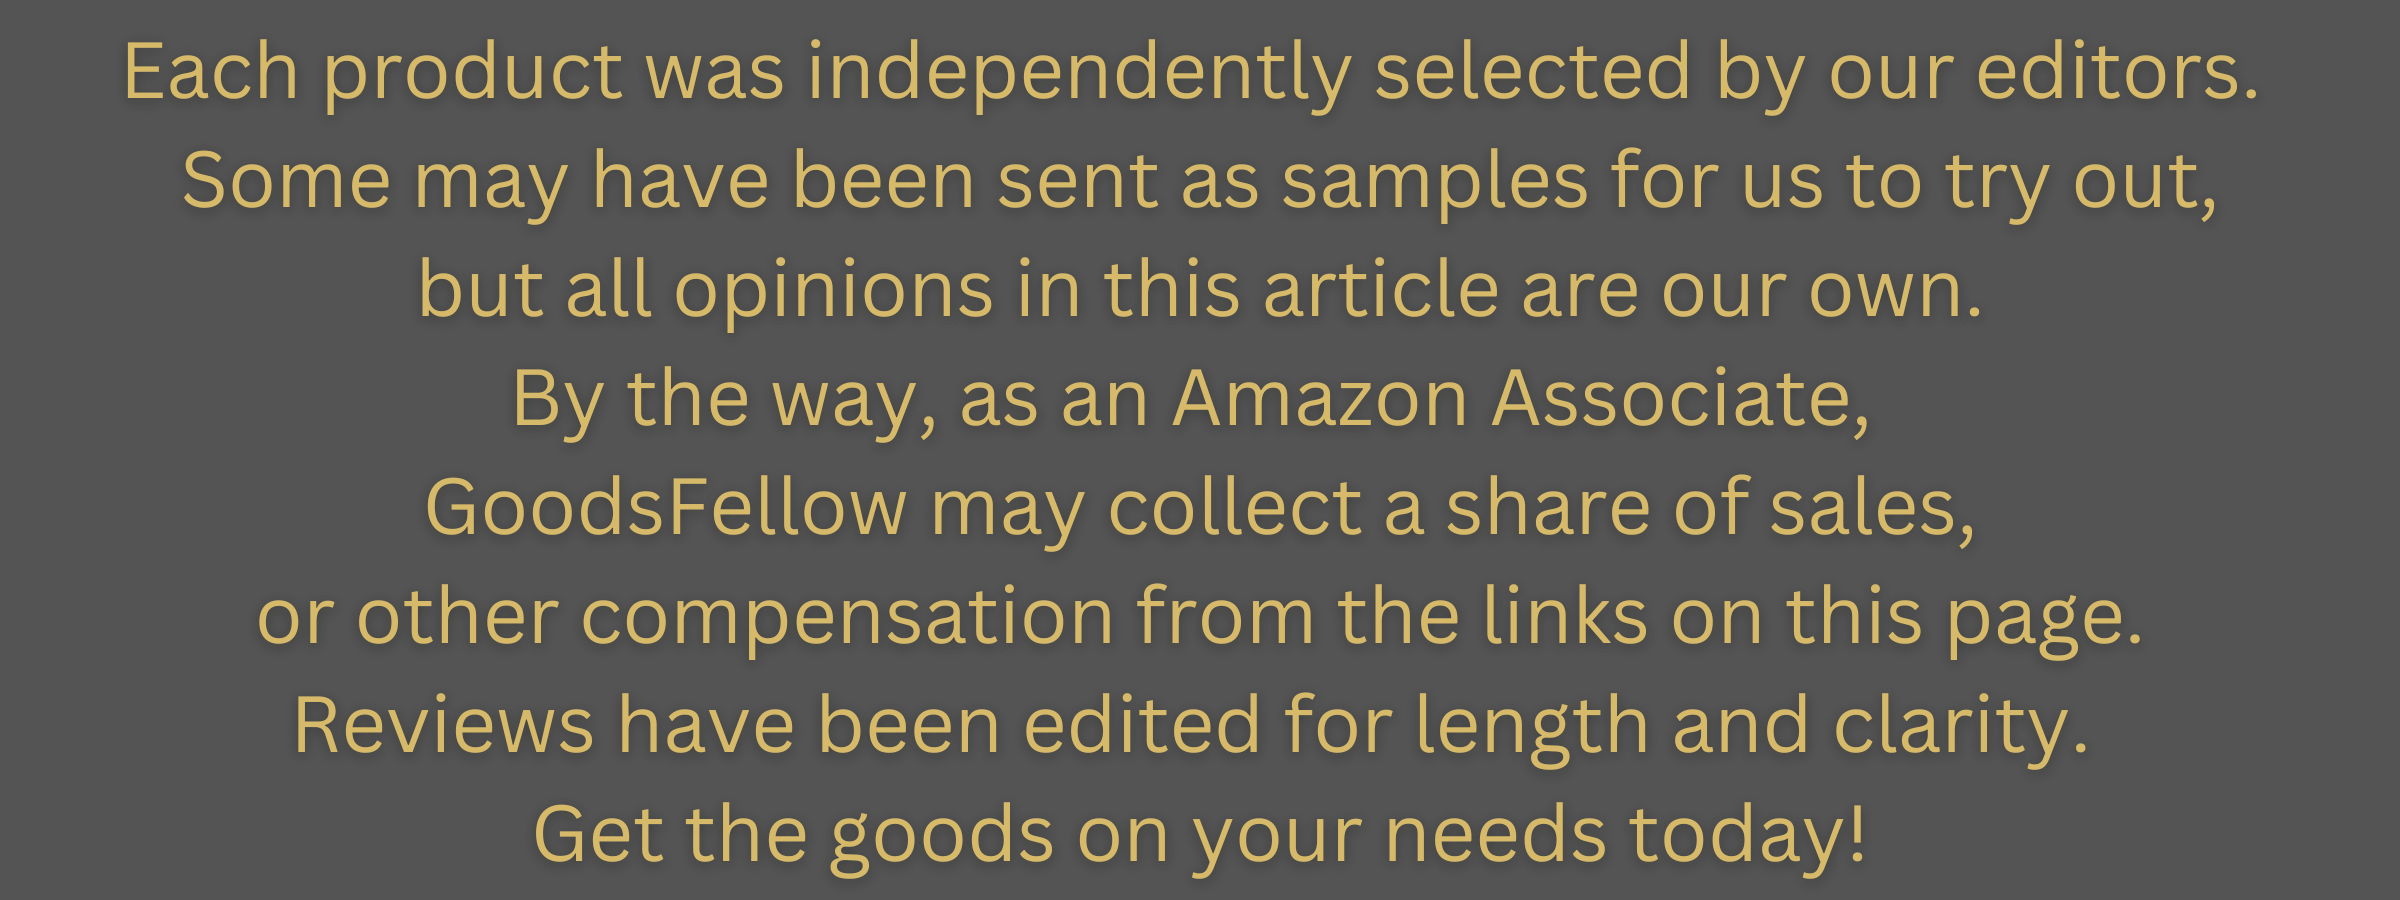 Amazon Associates Disclosure